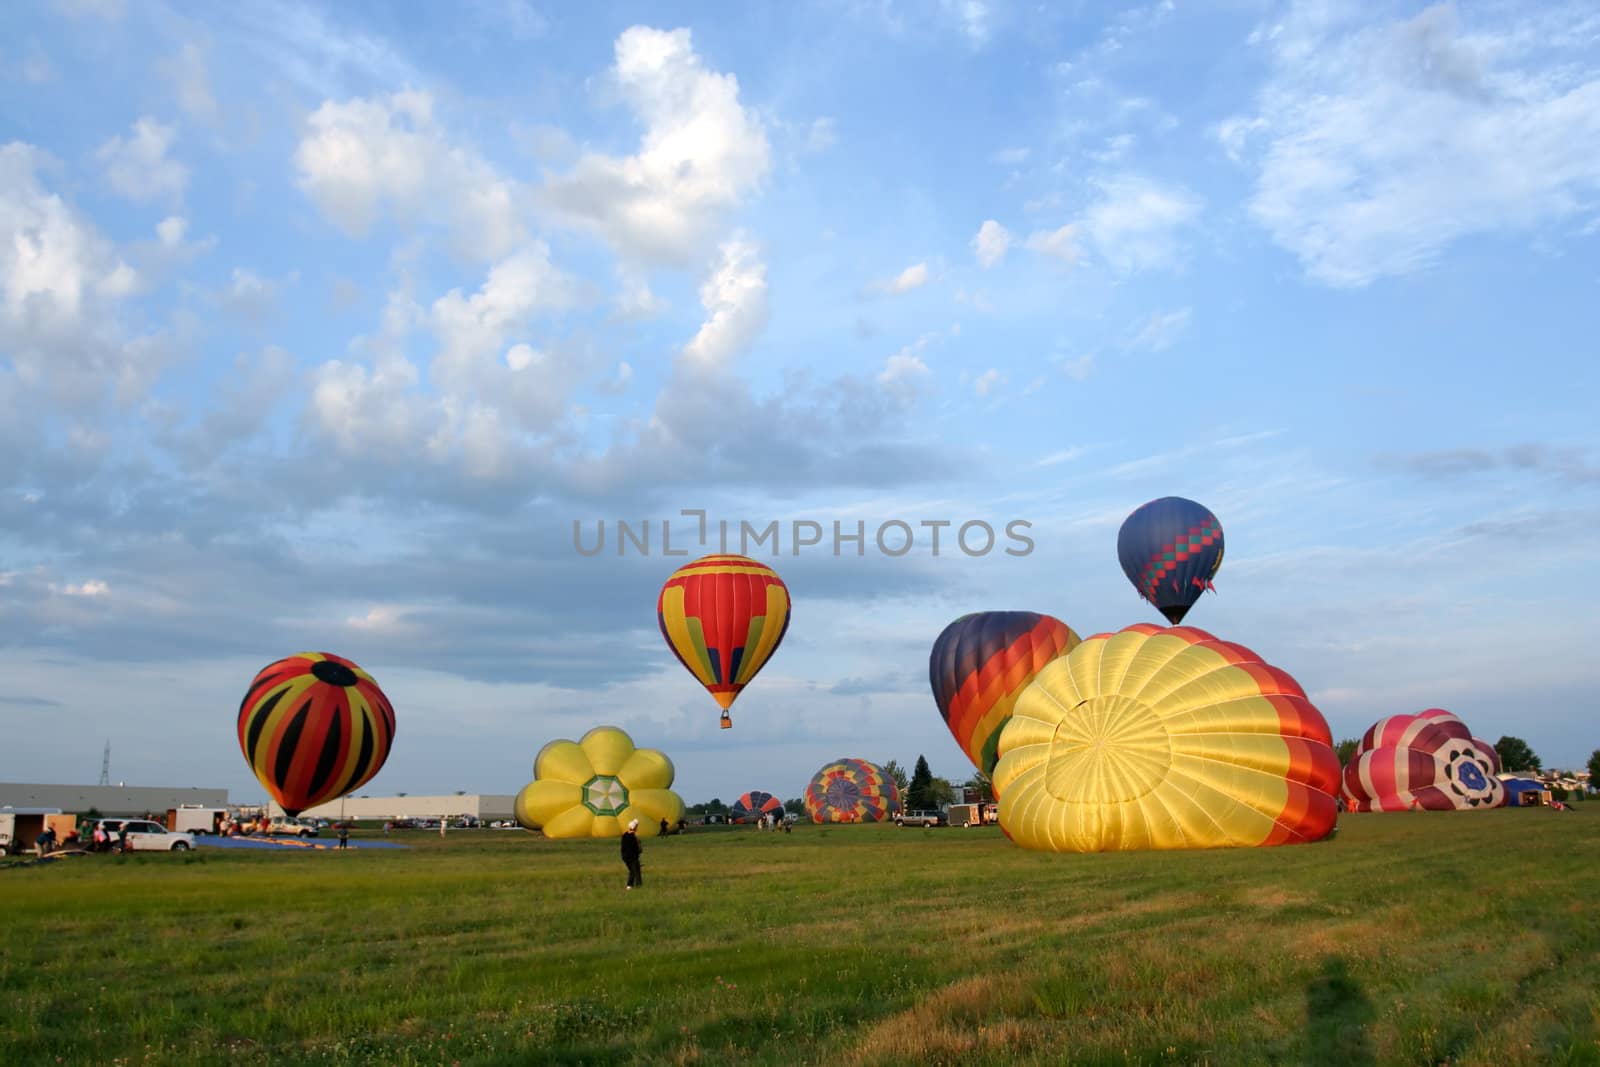 Hot air balloon festival - St-Jean-sur-Richelieu, Quebec, Canada by Hbak